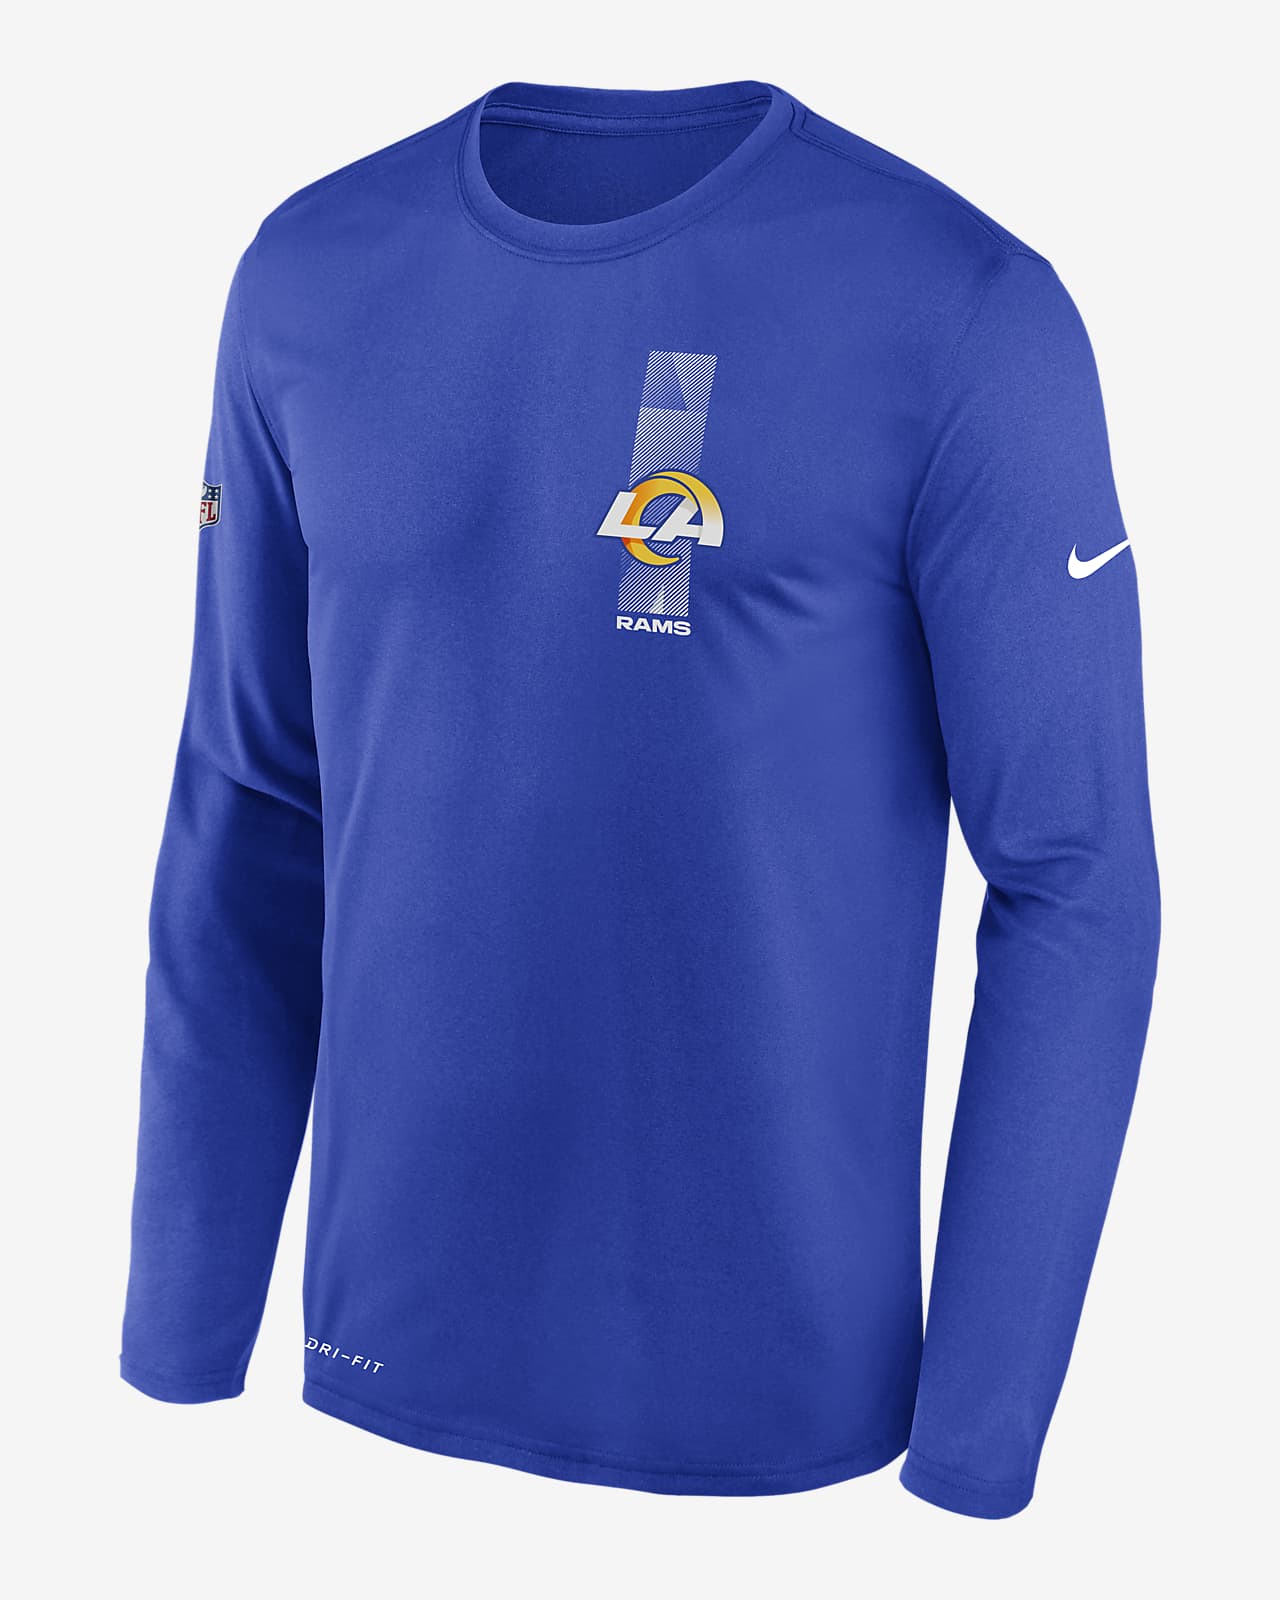 Nfl Rams T Shirt Off 77 Free Shipping - t shirt in roblox nike off 77 free shipping